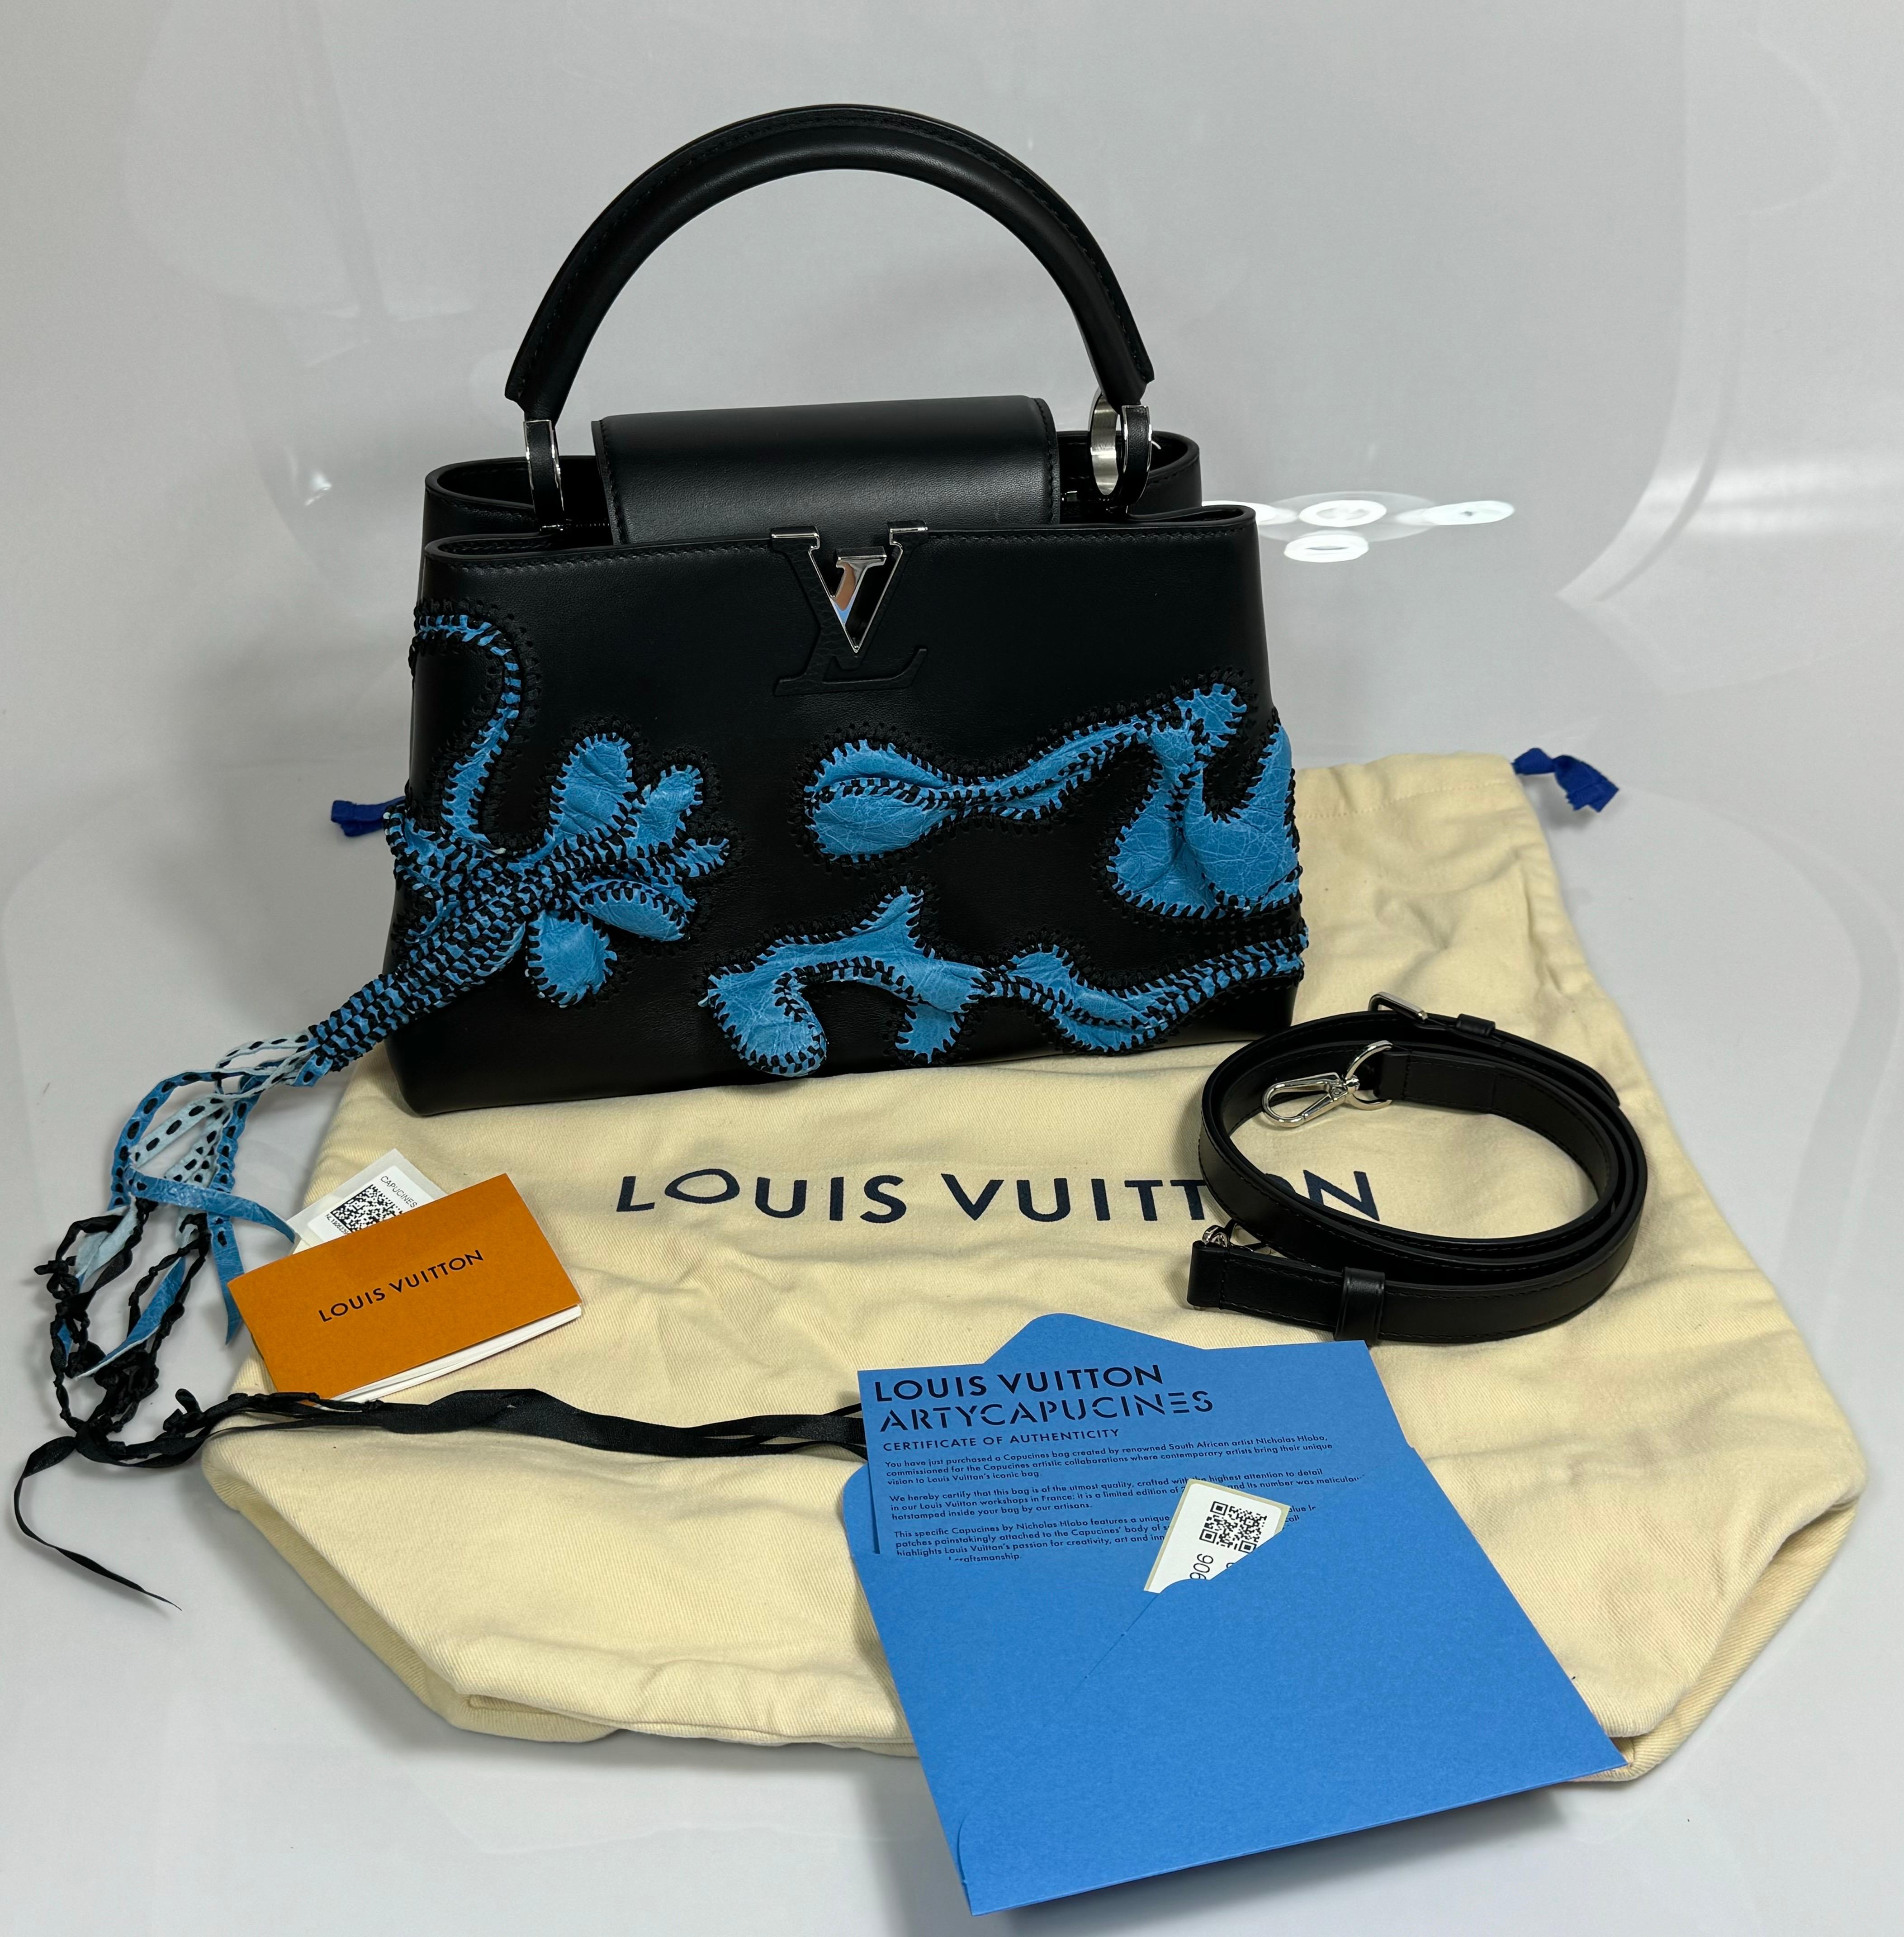 Louis Vuitton Limited Edition Nicholas Hlobo's Artycapucines Handbag-NEW IN BOX For Sale 14